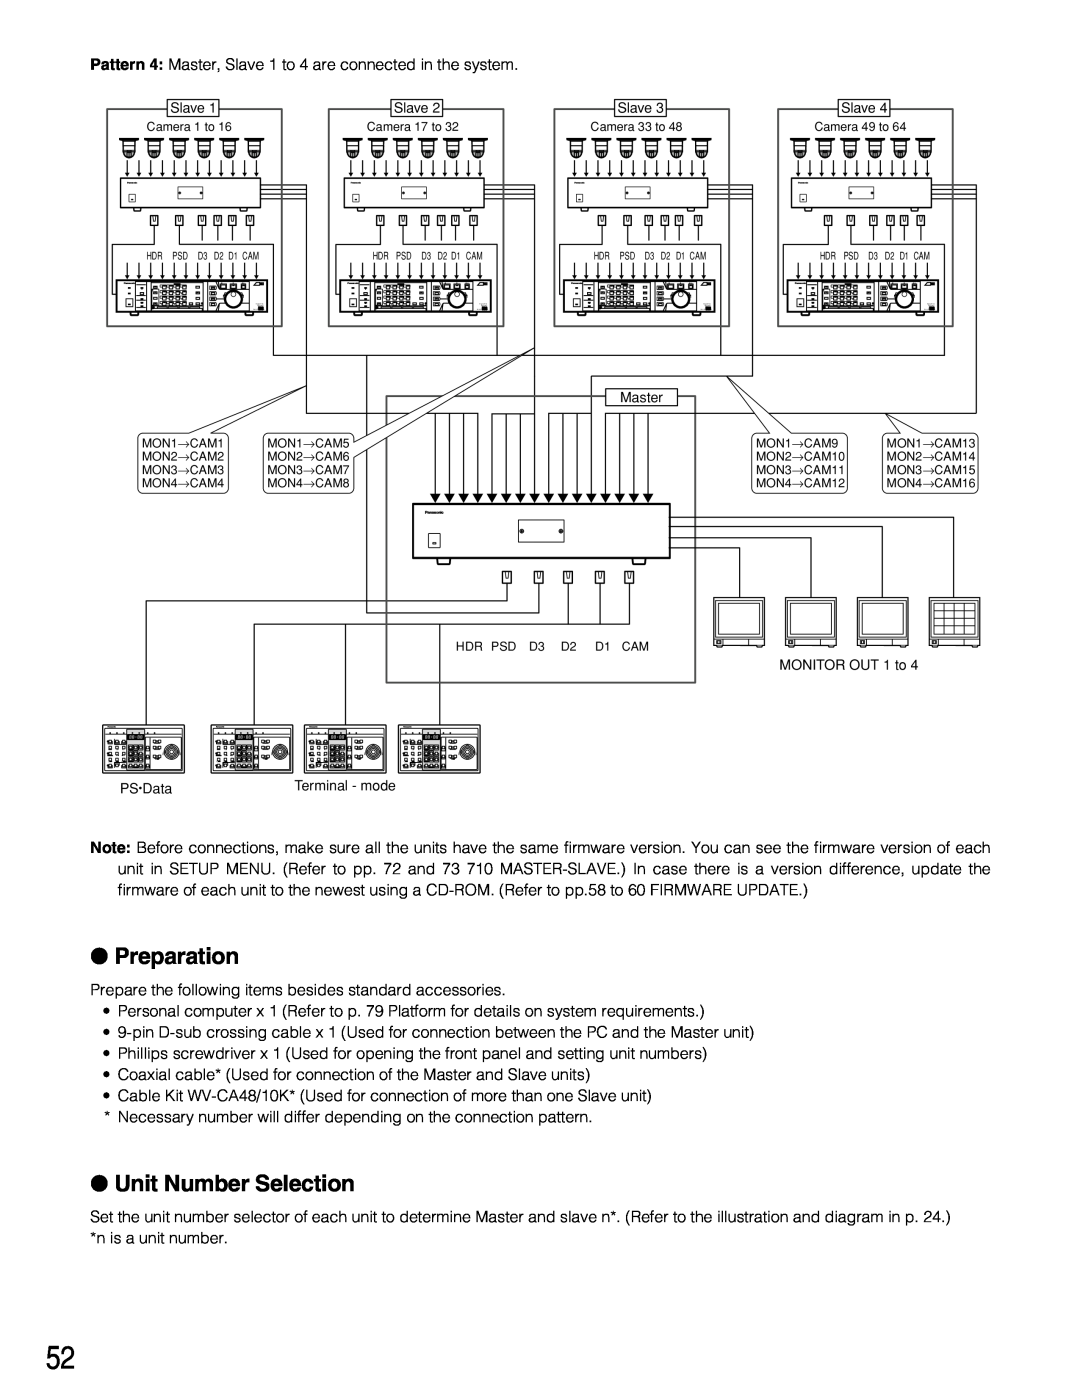 Panasonic WJ-SX150A manual Preparation, Unit Number Selection 